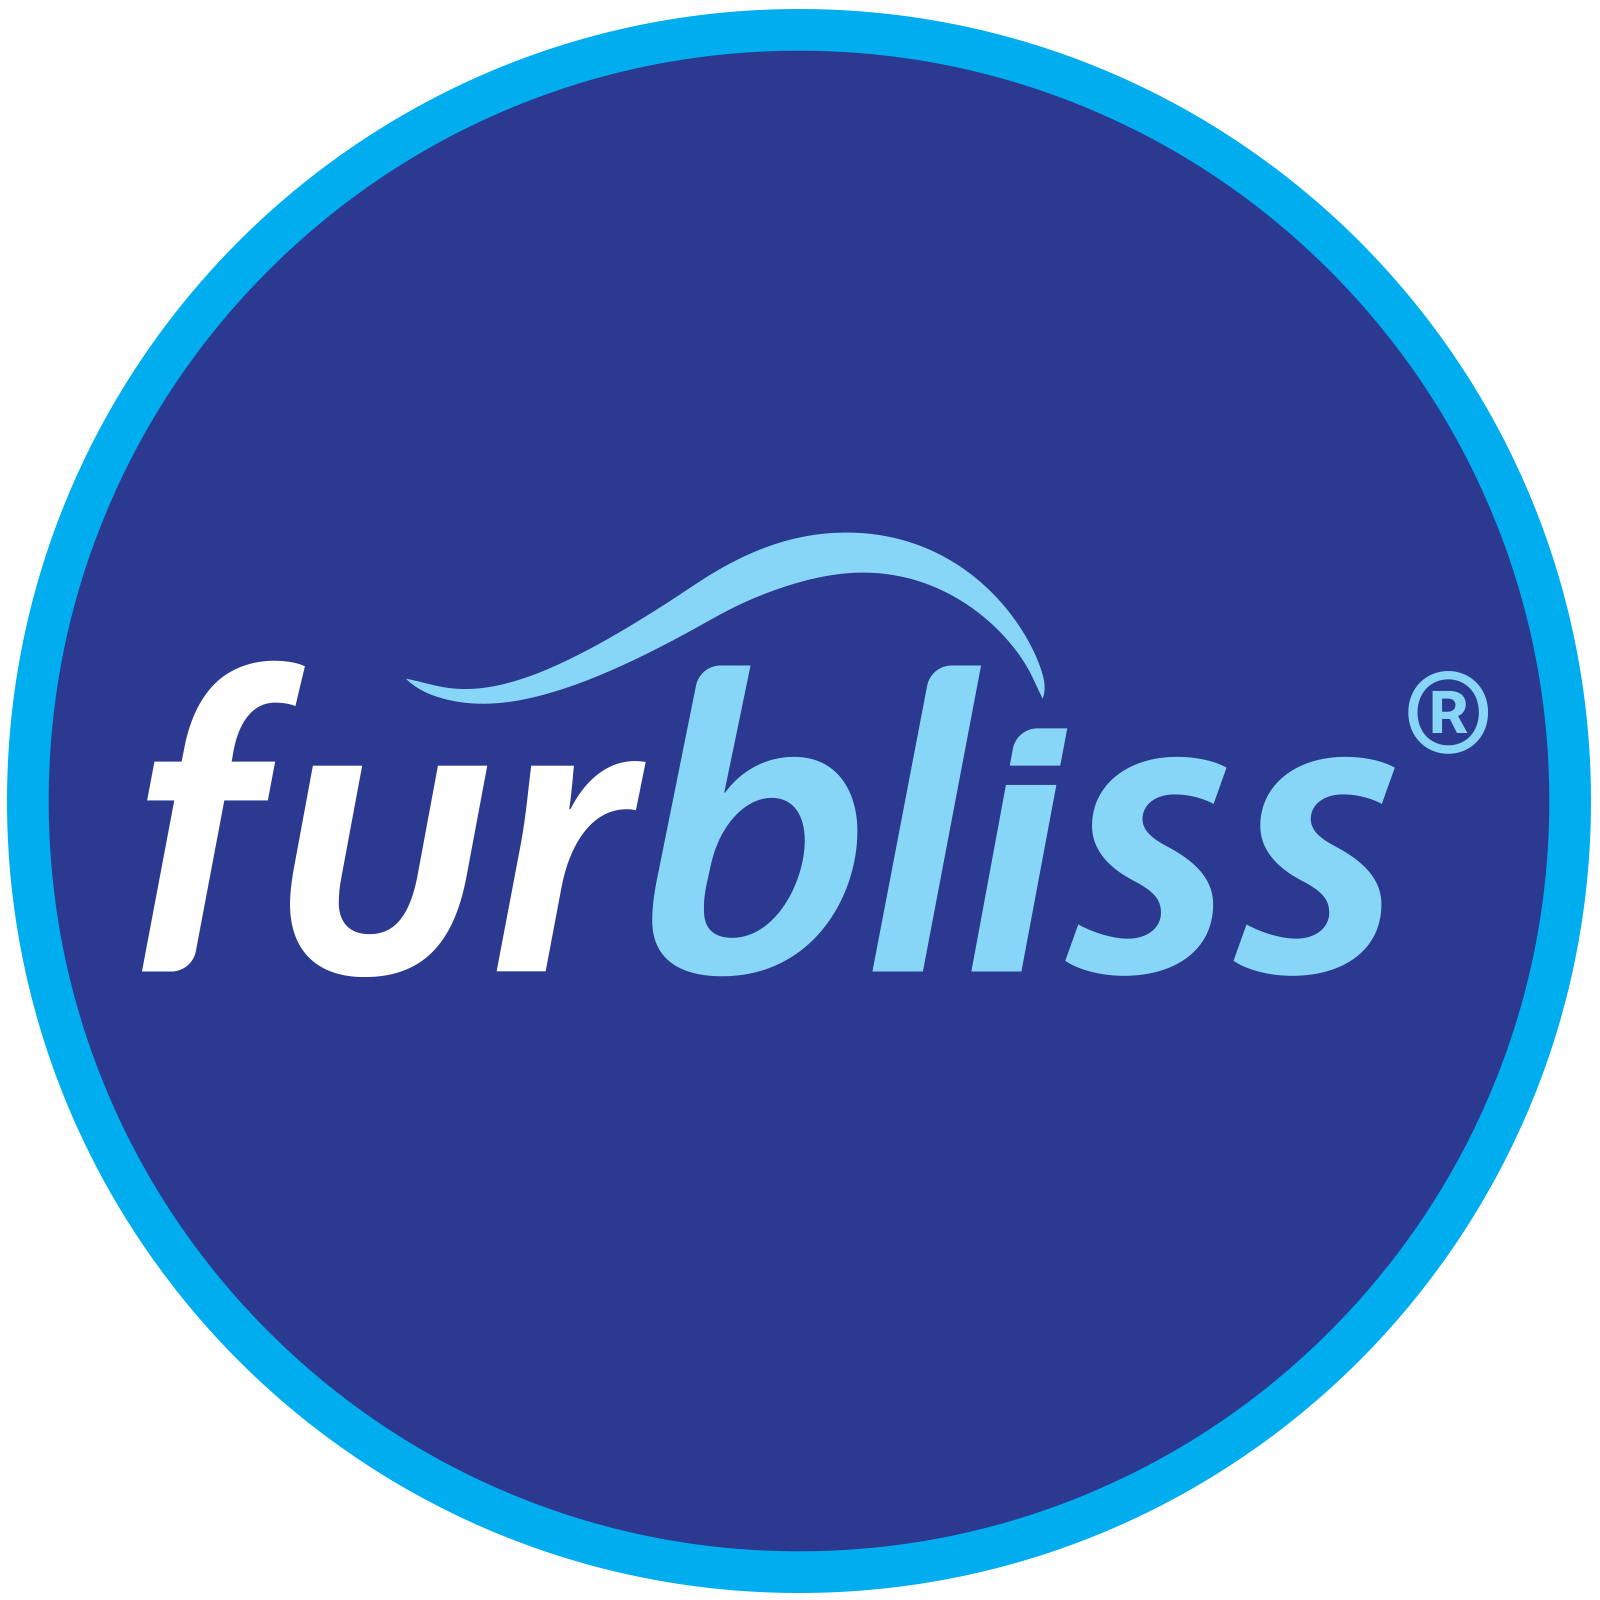 $FurBliss Logo